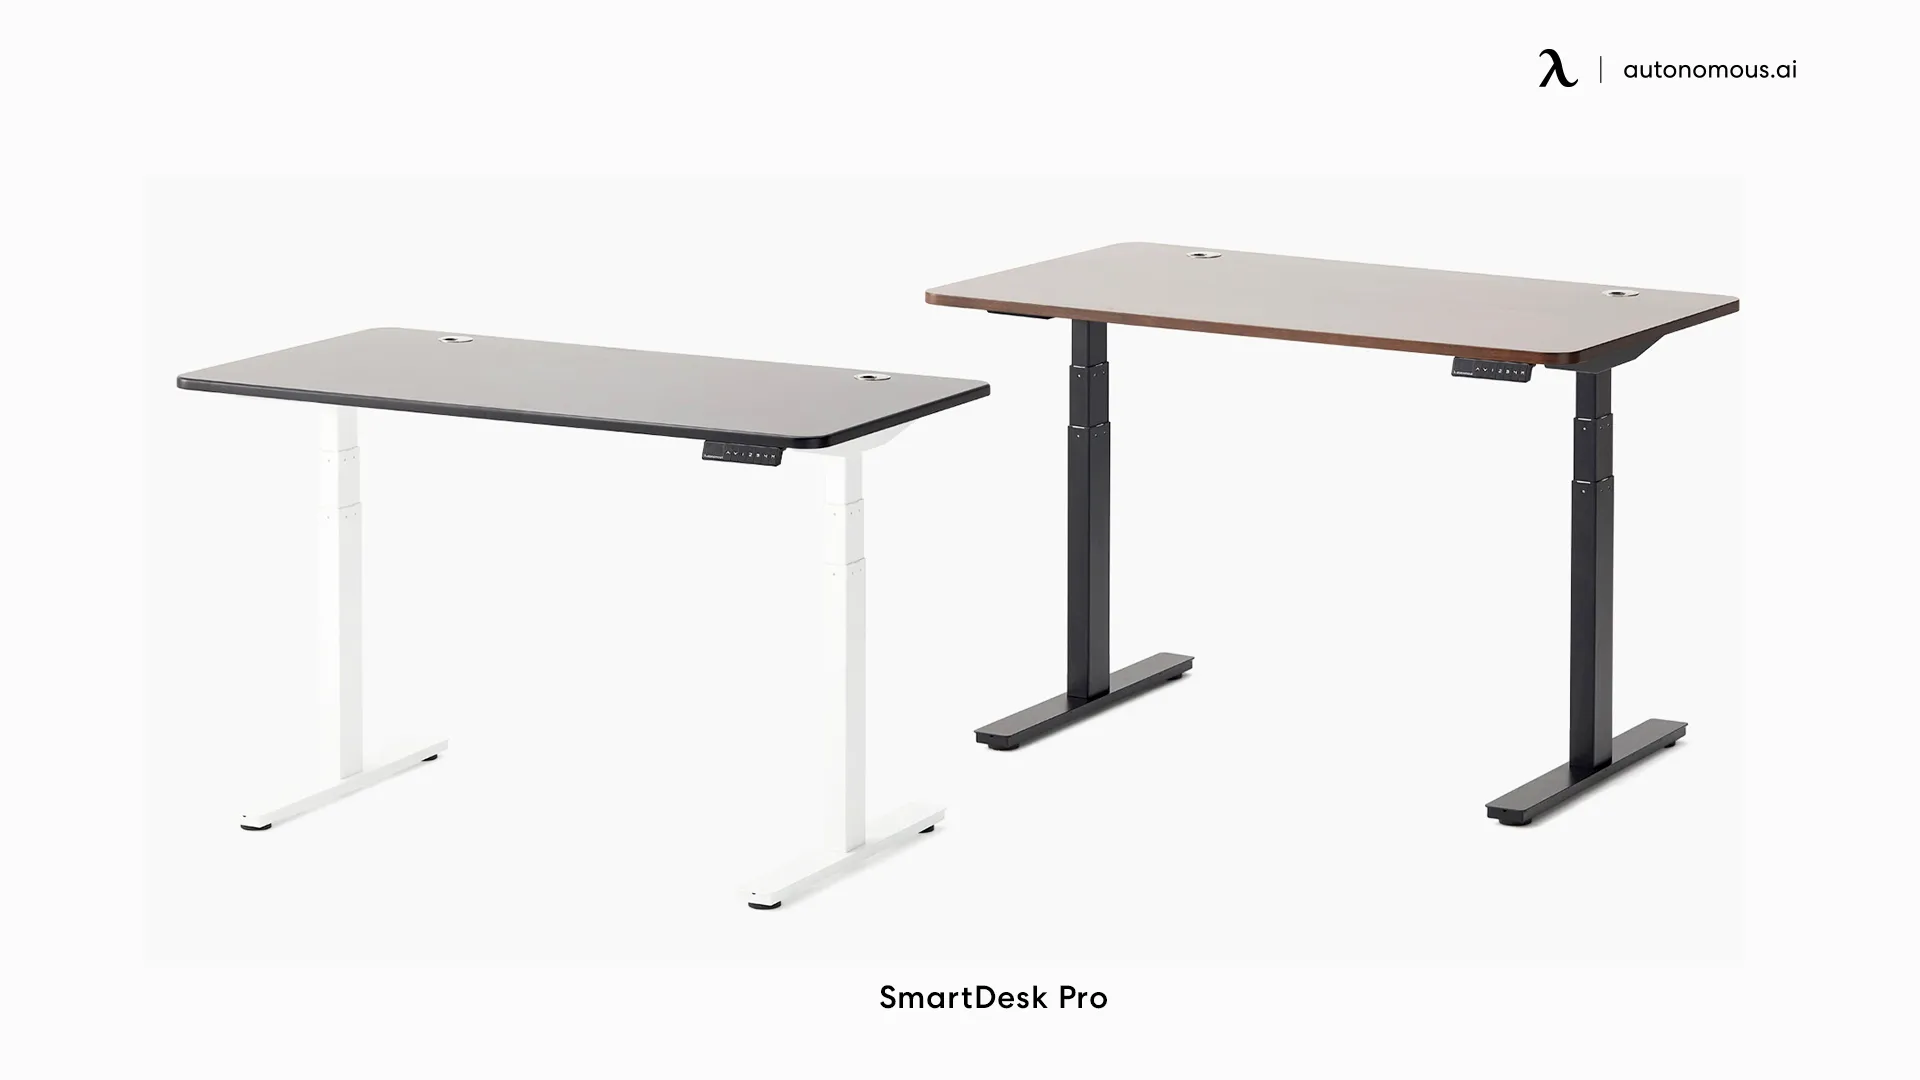 SmartDesk Pro large standing desk